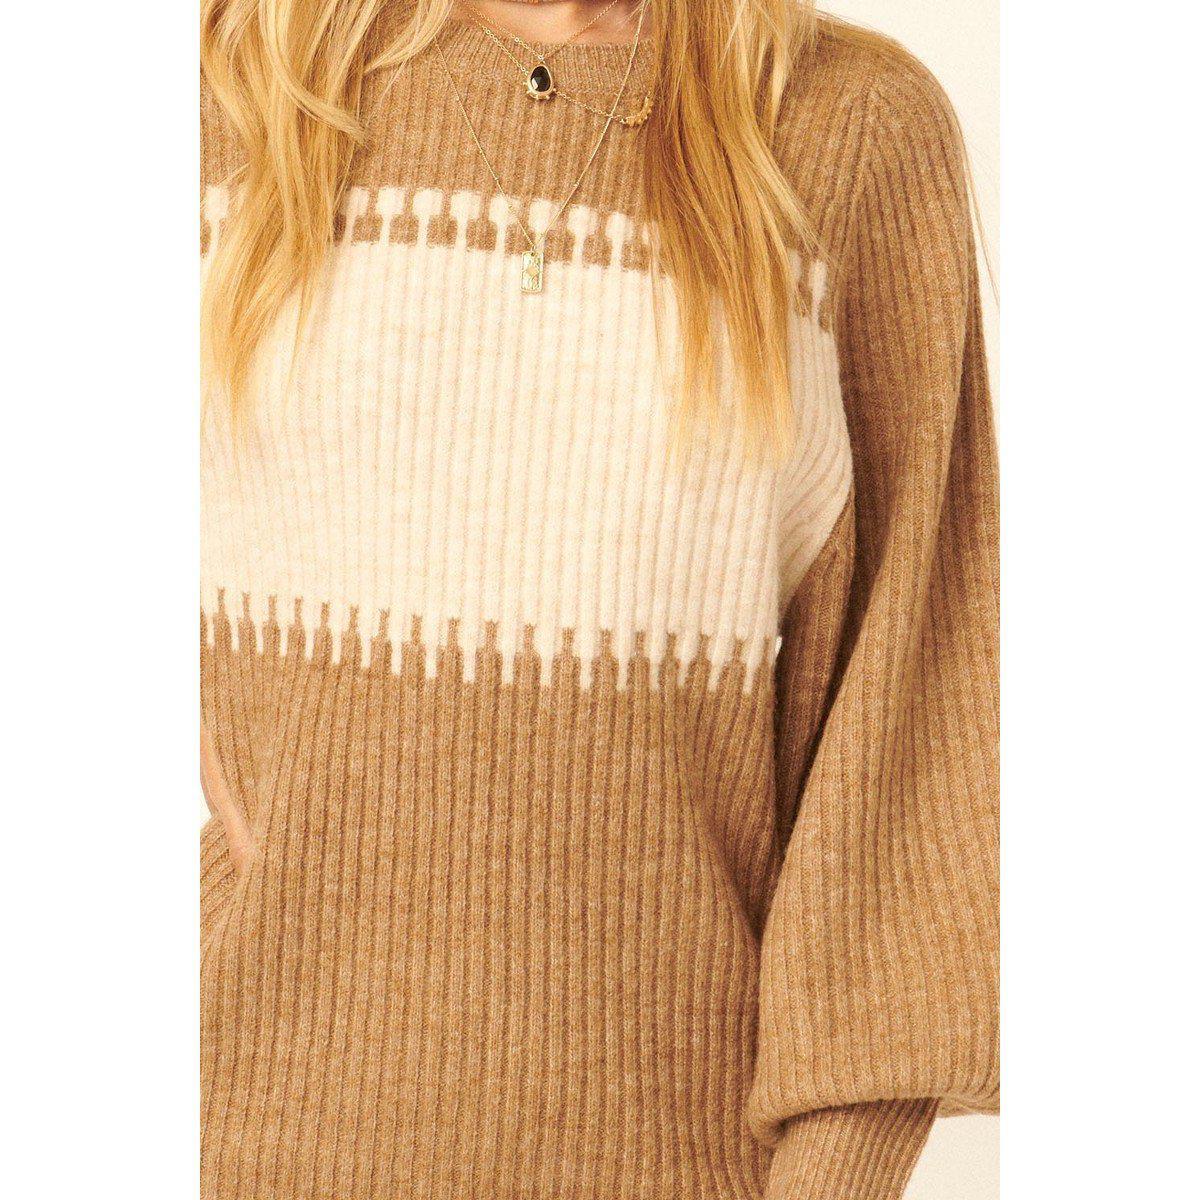 A Ribbed Knit Sweater Mini Dress-Clothing Dresses-NXTLVLNYC